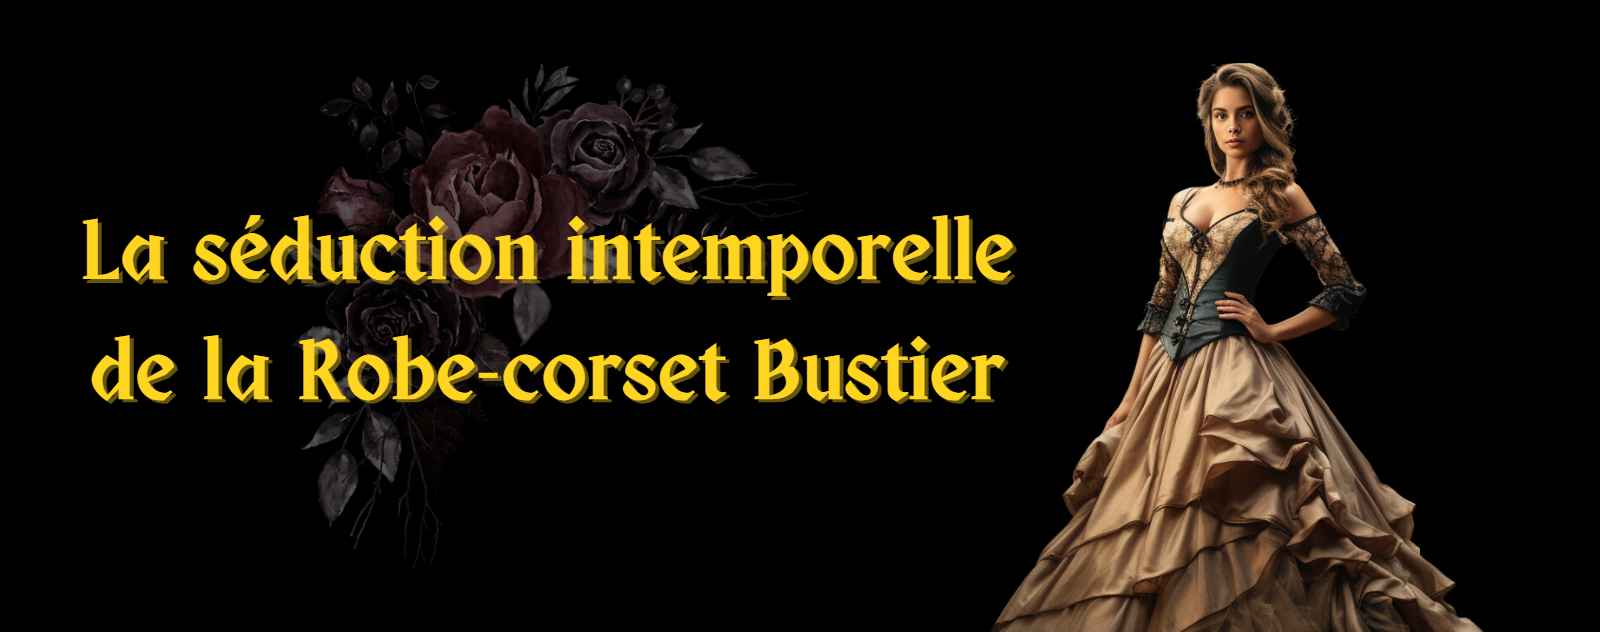 Robe-corset Bustier